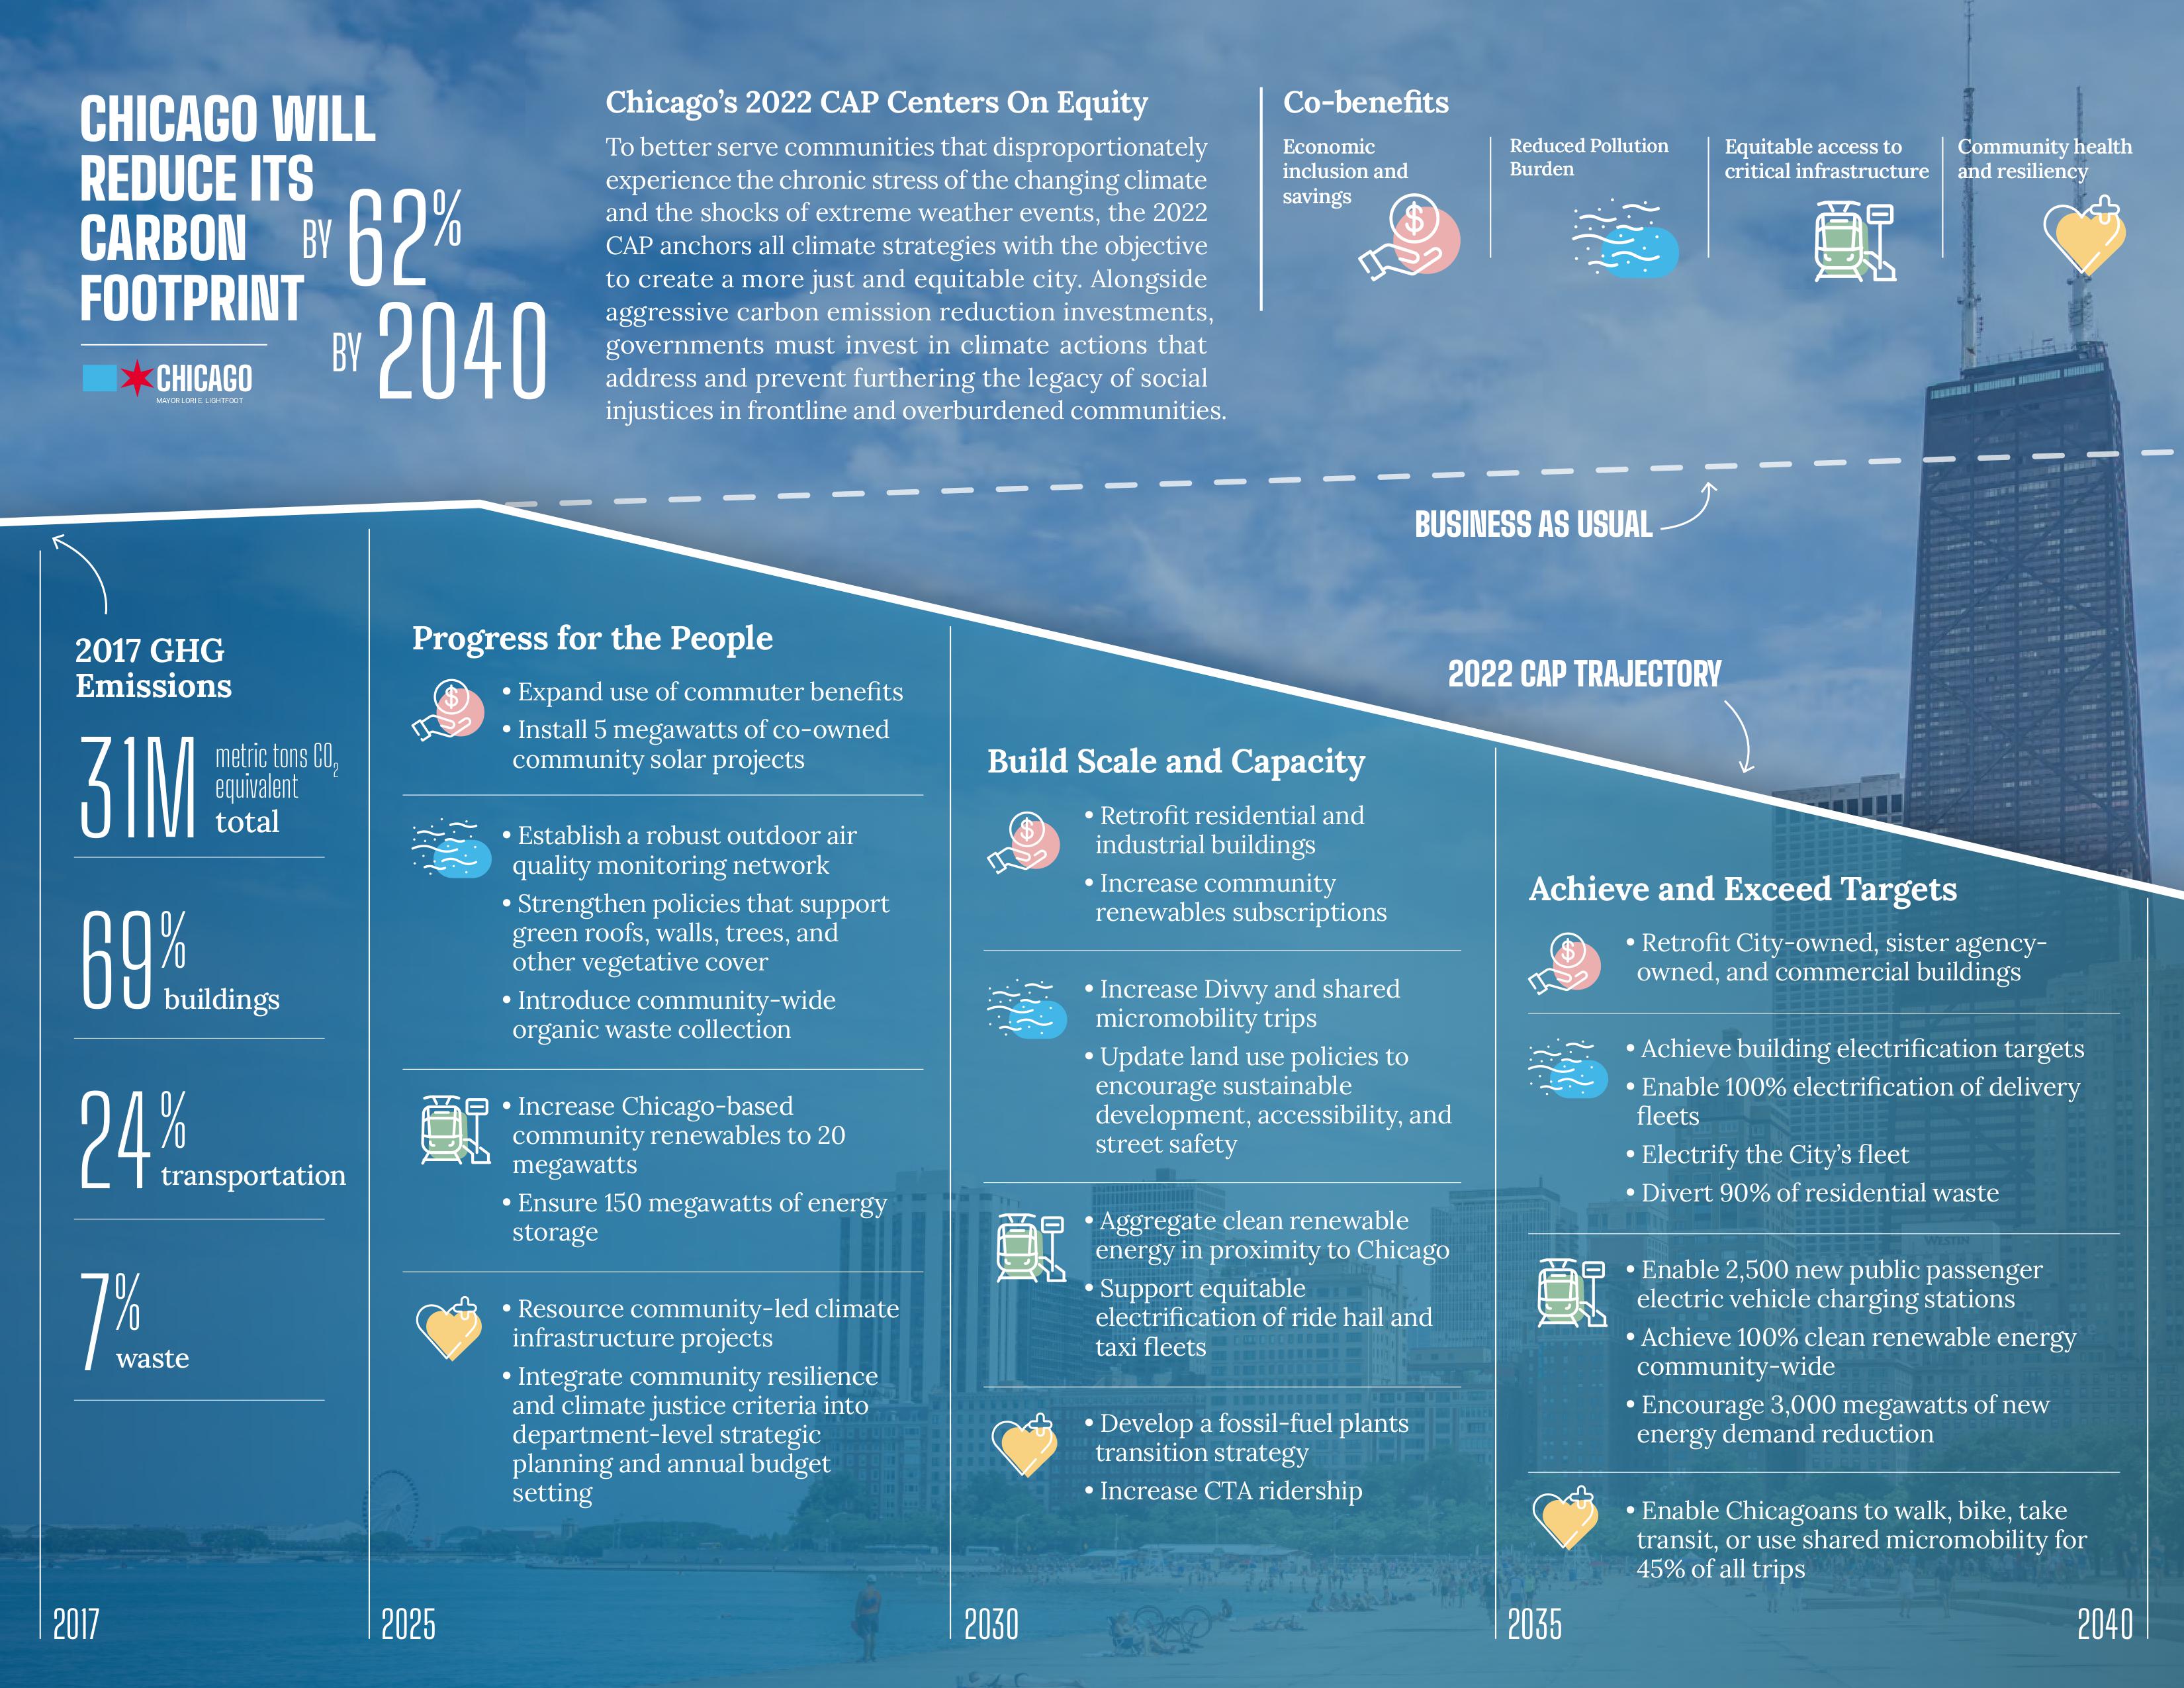 Timeline of strategies and milestones through 2040 